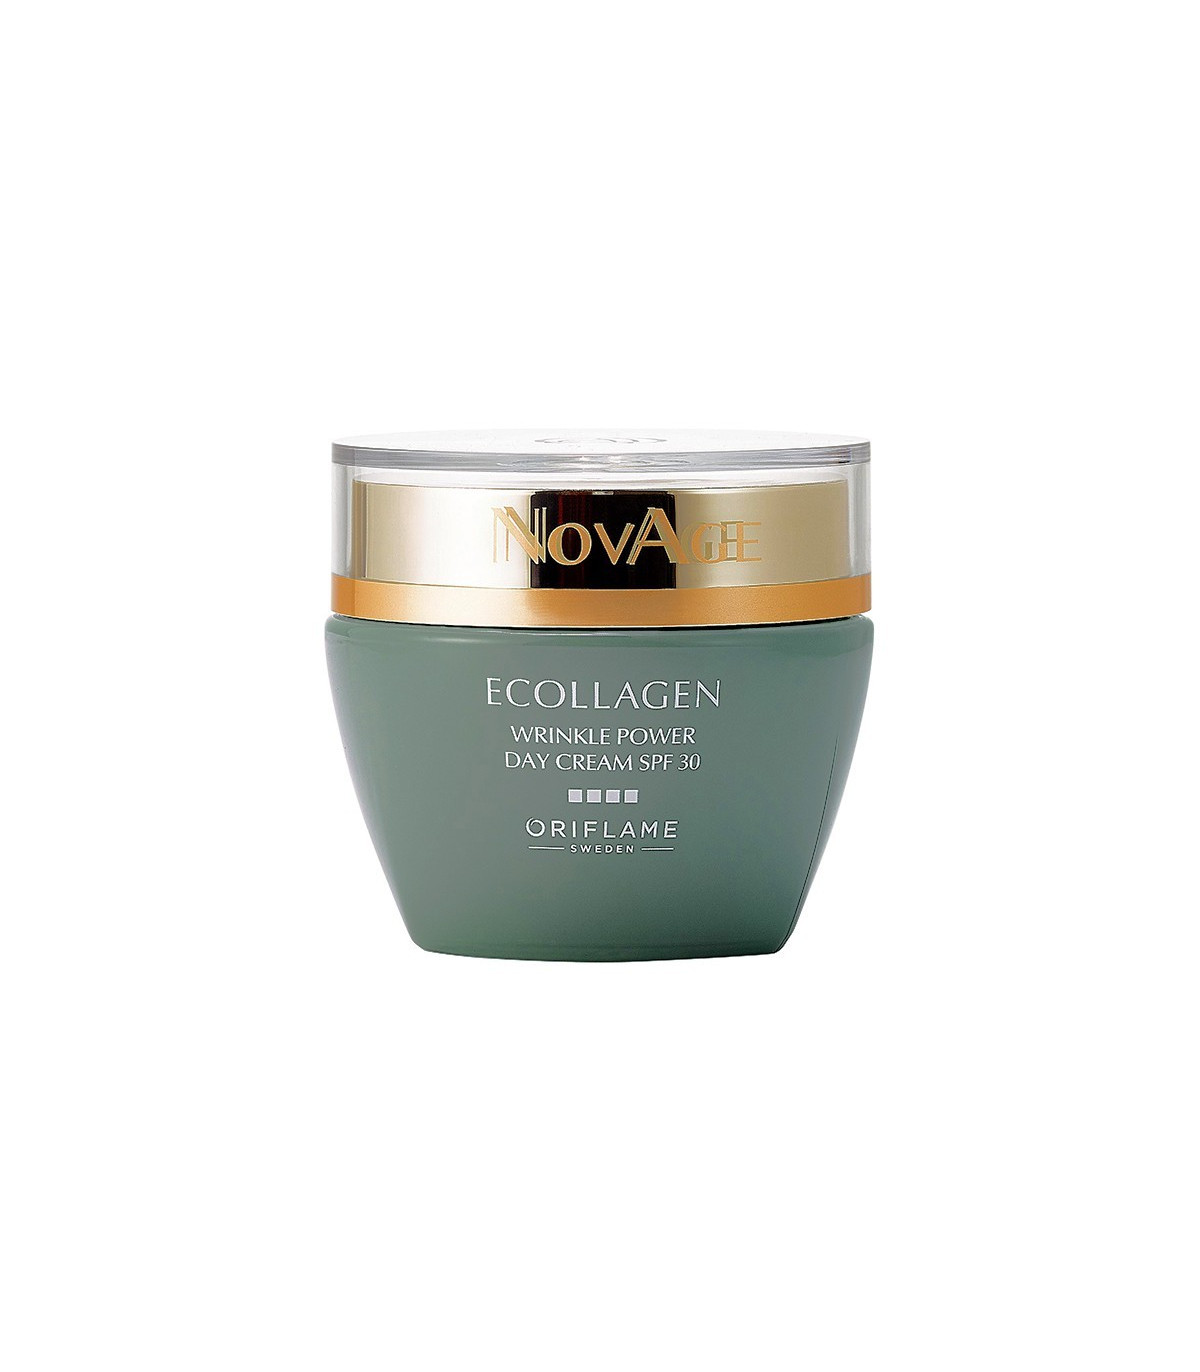 NovAge Ecollagen Wrinkle Power Day Cream SPF-30  – 50ml